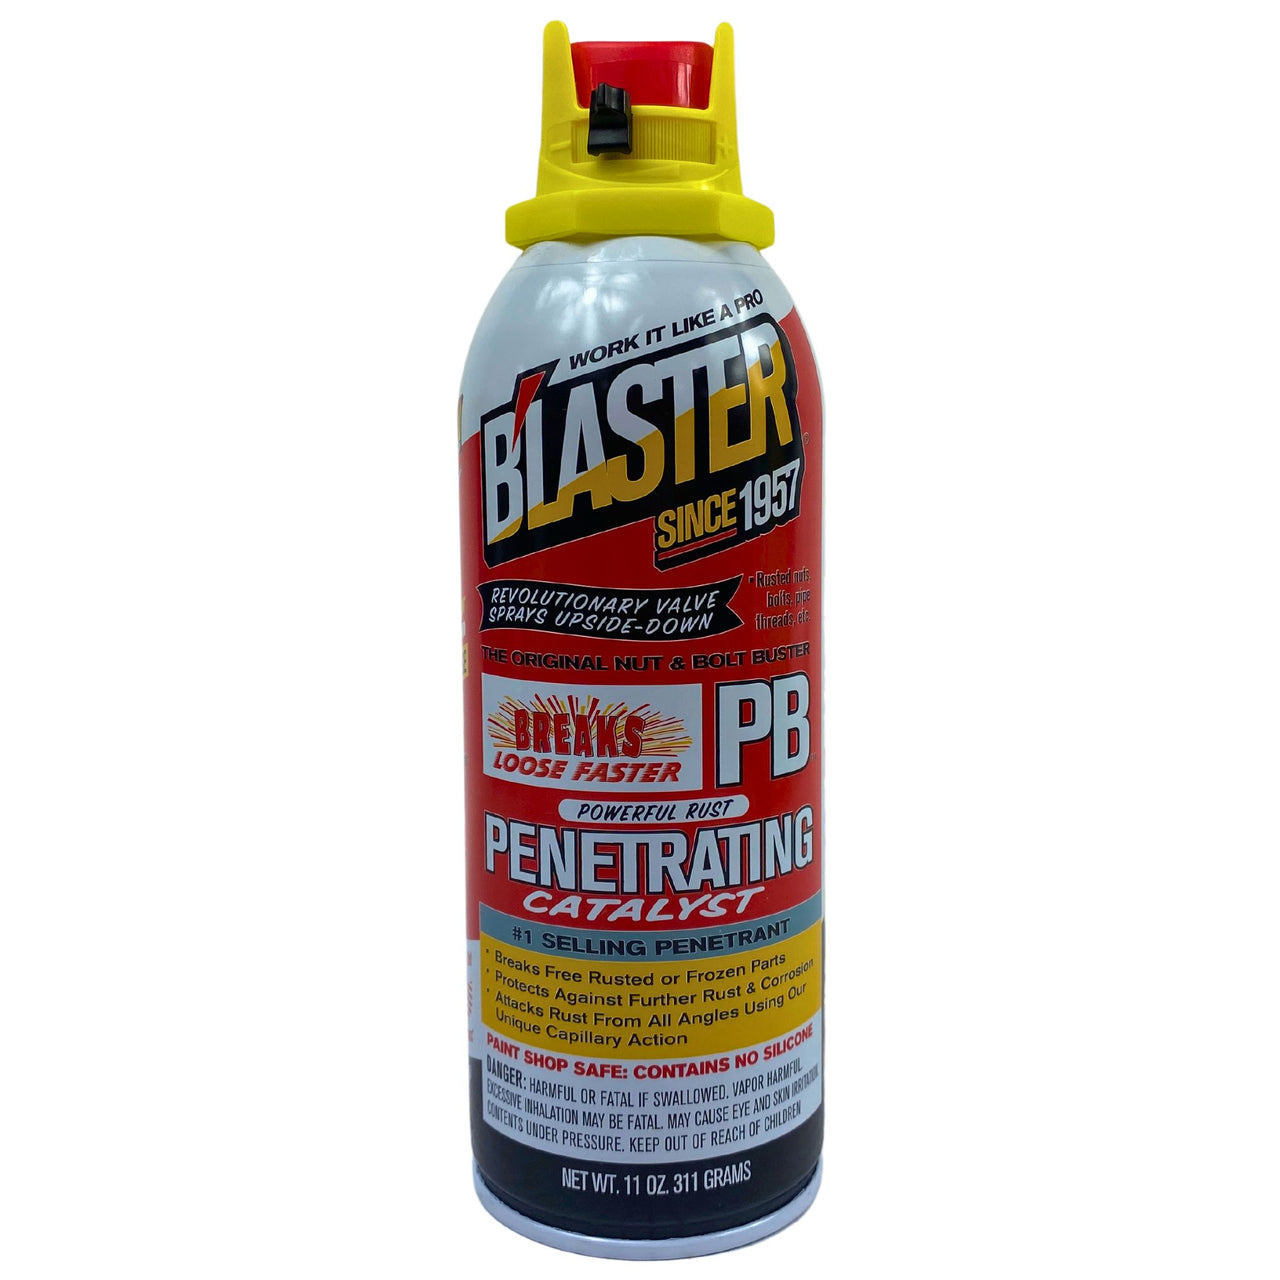 Blaster Since 1957 The Original Nut & Bolt Buster Powerful